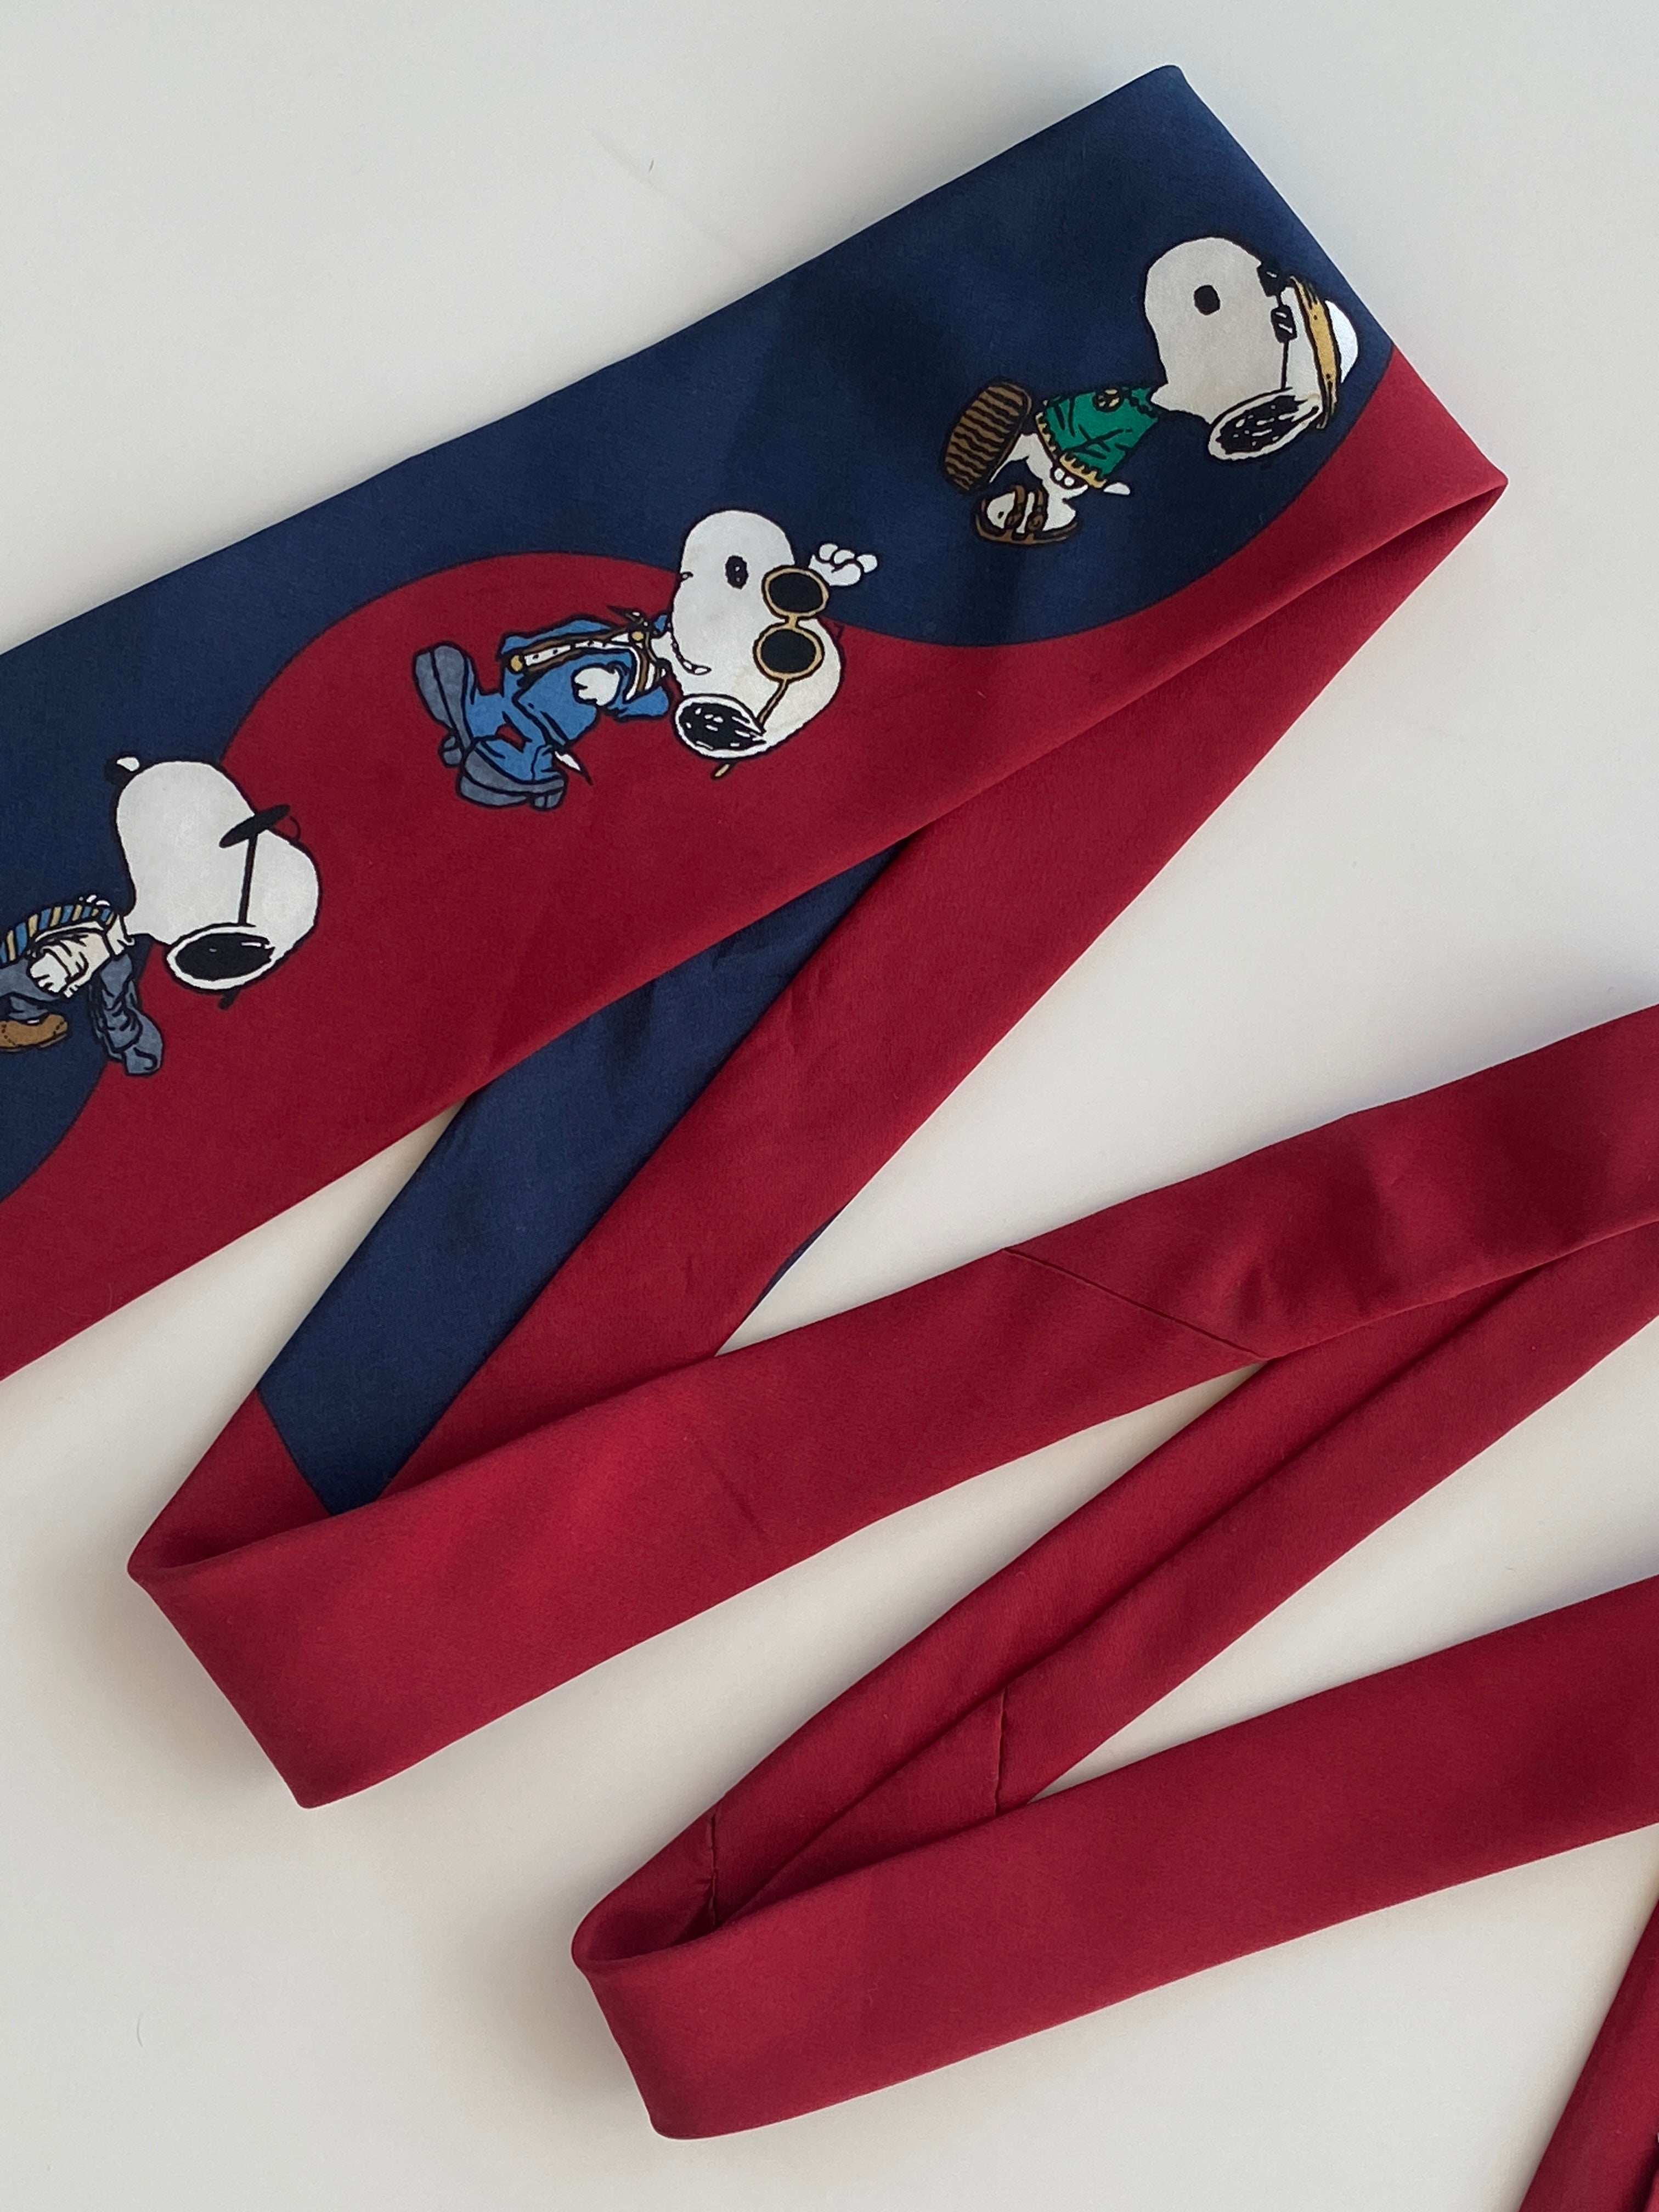 Vintage Snoopy & Friends Peanuts Collectible Graphic Tie - Balagan Vintage Ties 90s, NEW IN, print, printed tie, tie, ties, vintage, vintage tie